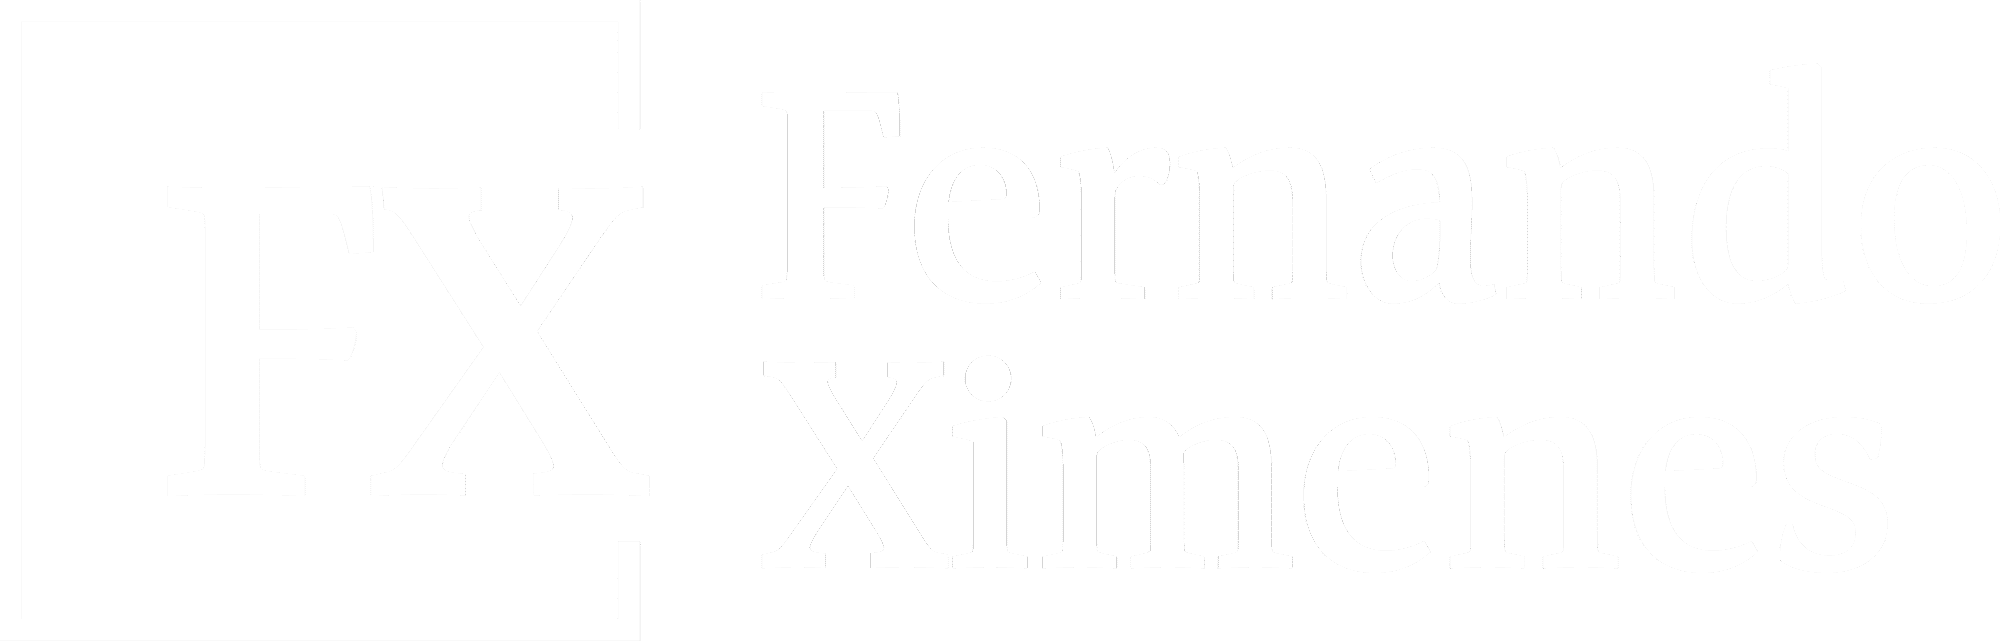 Logotipo Fernando Ximenes